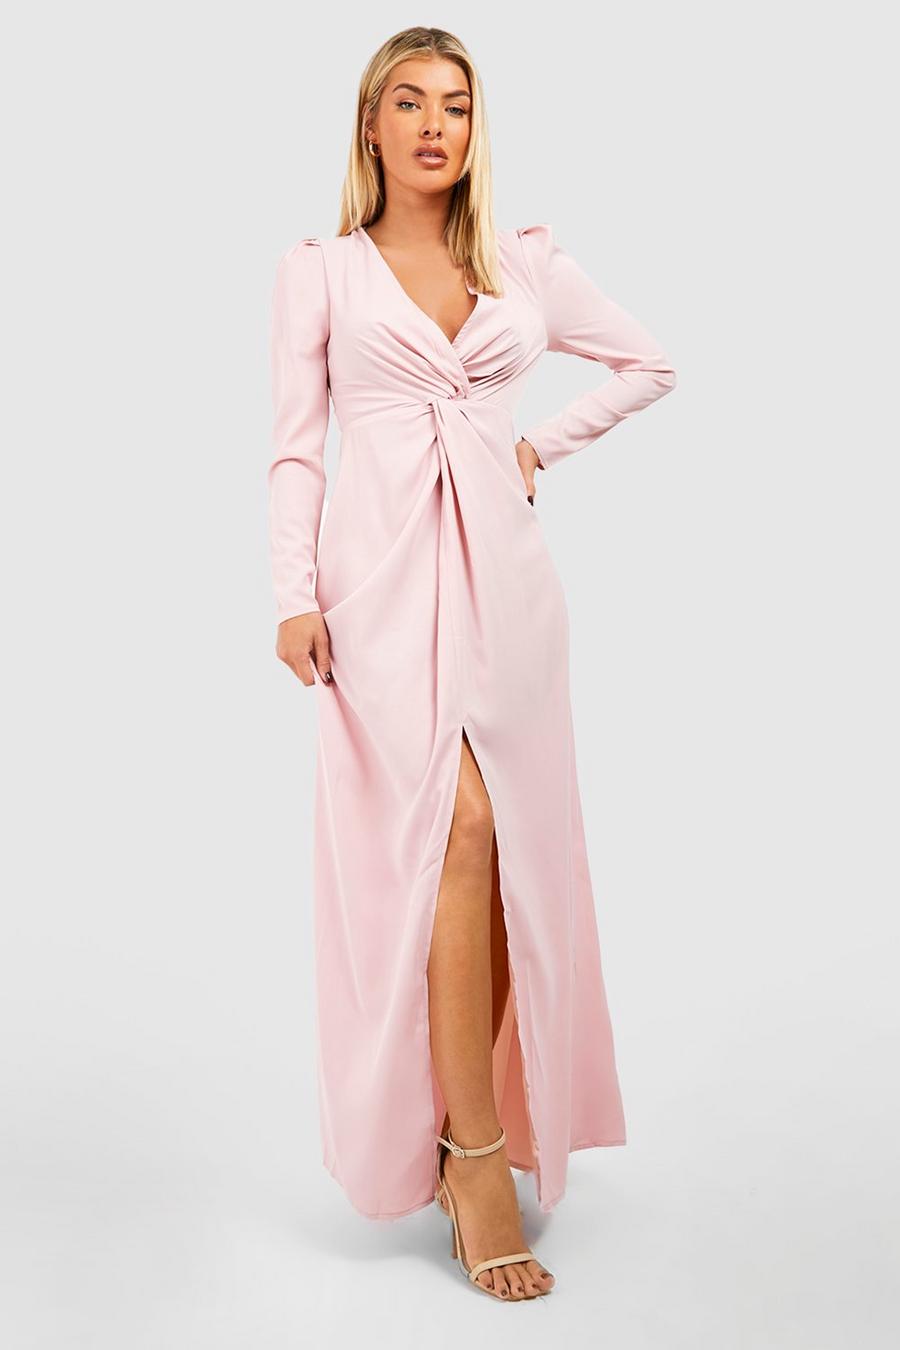 Blush pink Twist Front Detail Bridesmaid Dress